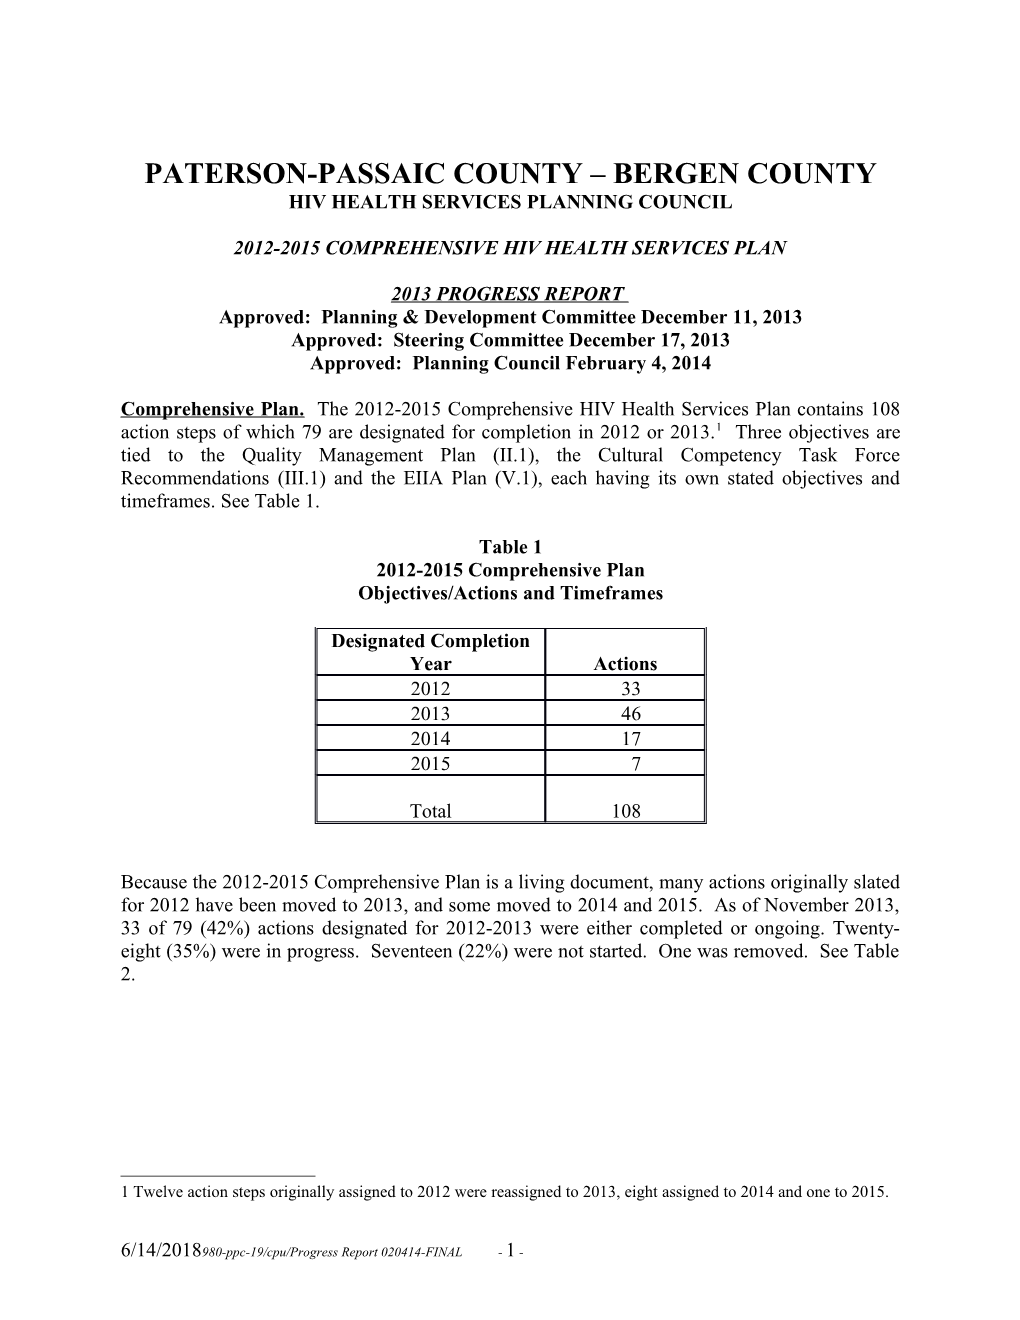 Paterson-Passaic County Bergen County s1